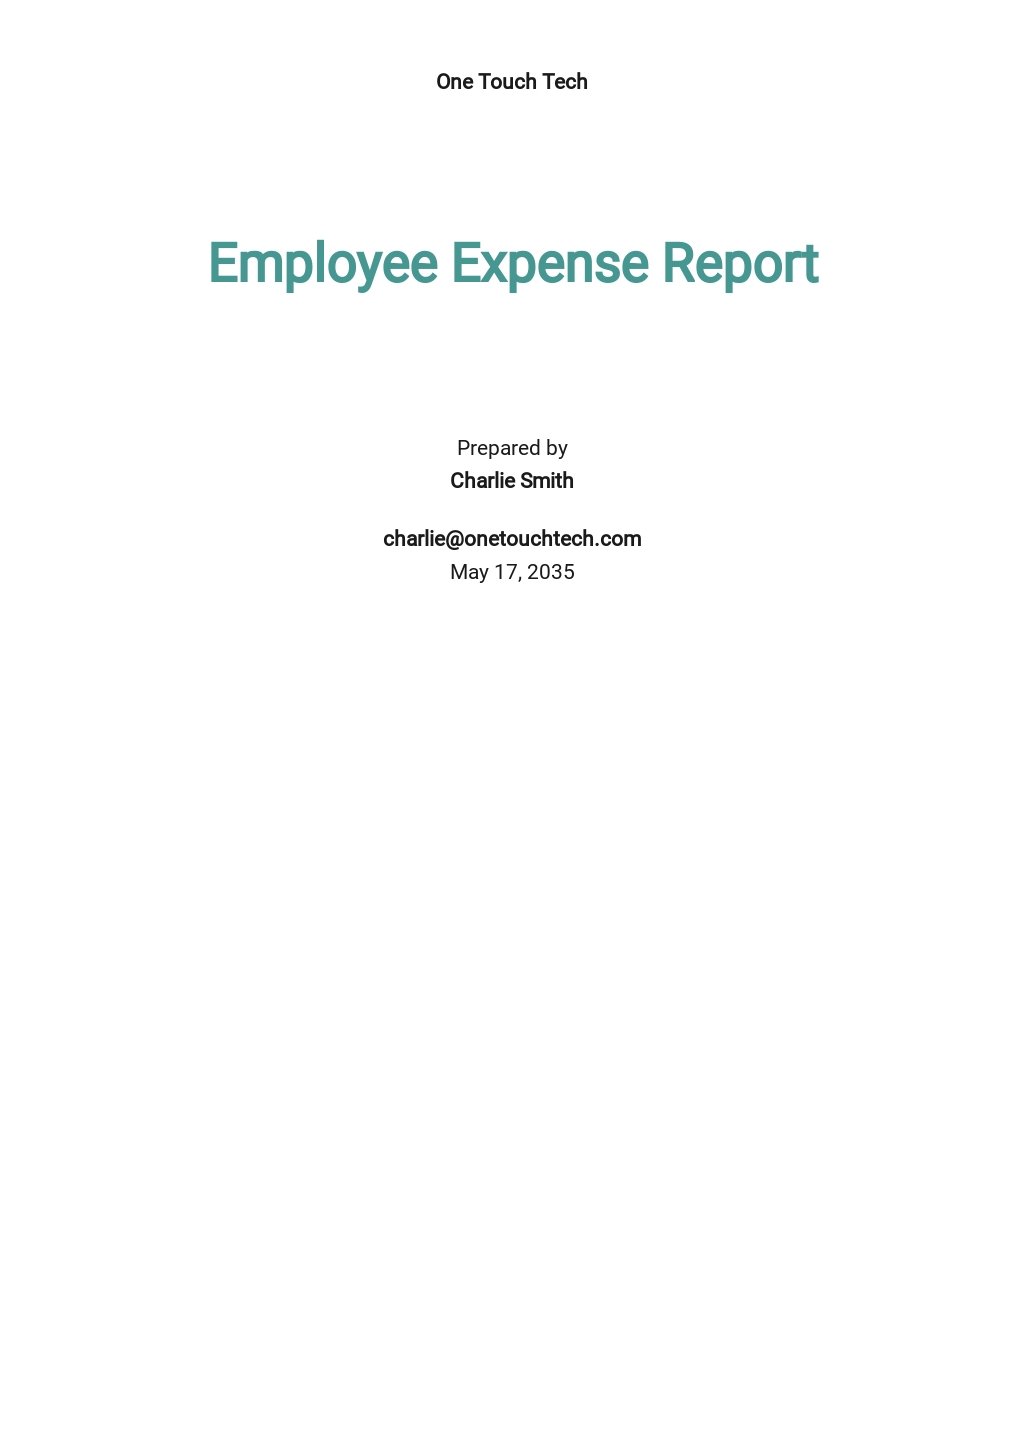 Free Employee Expense Report Template.jpe